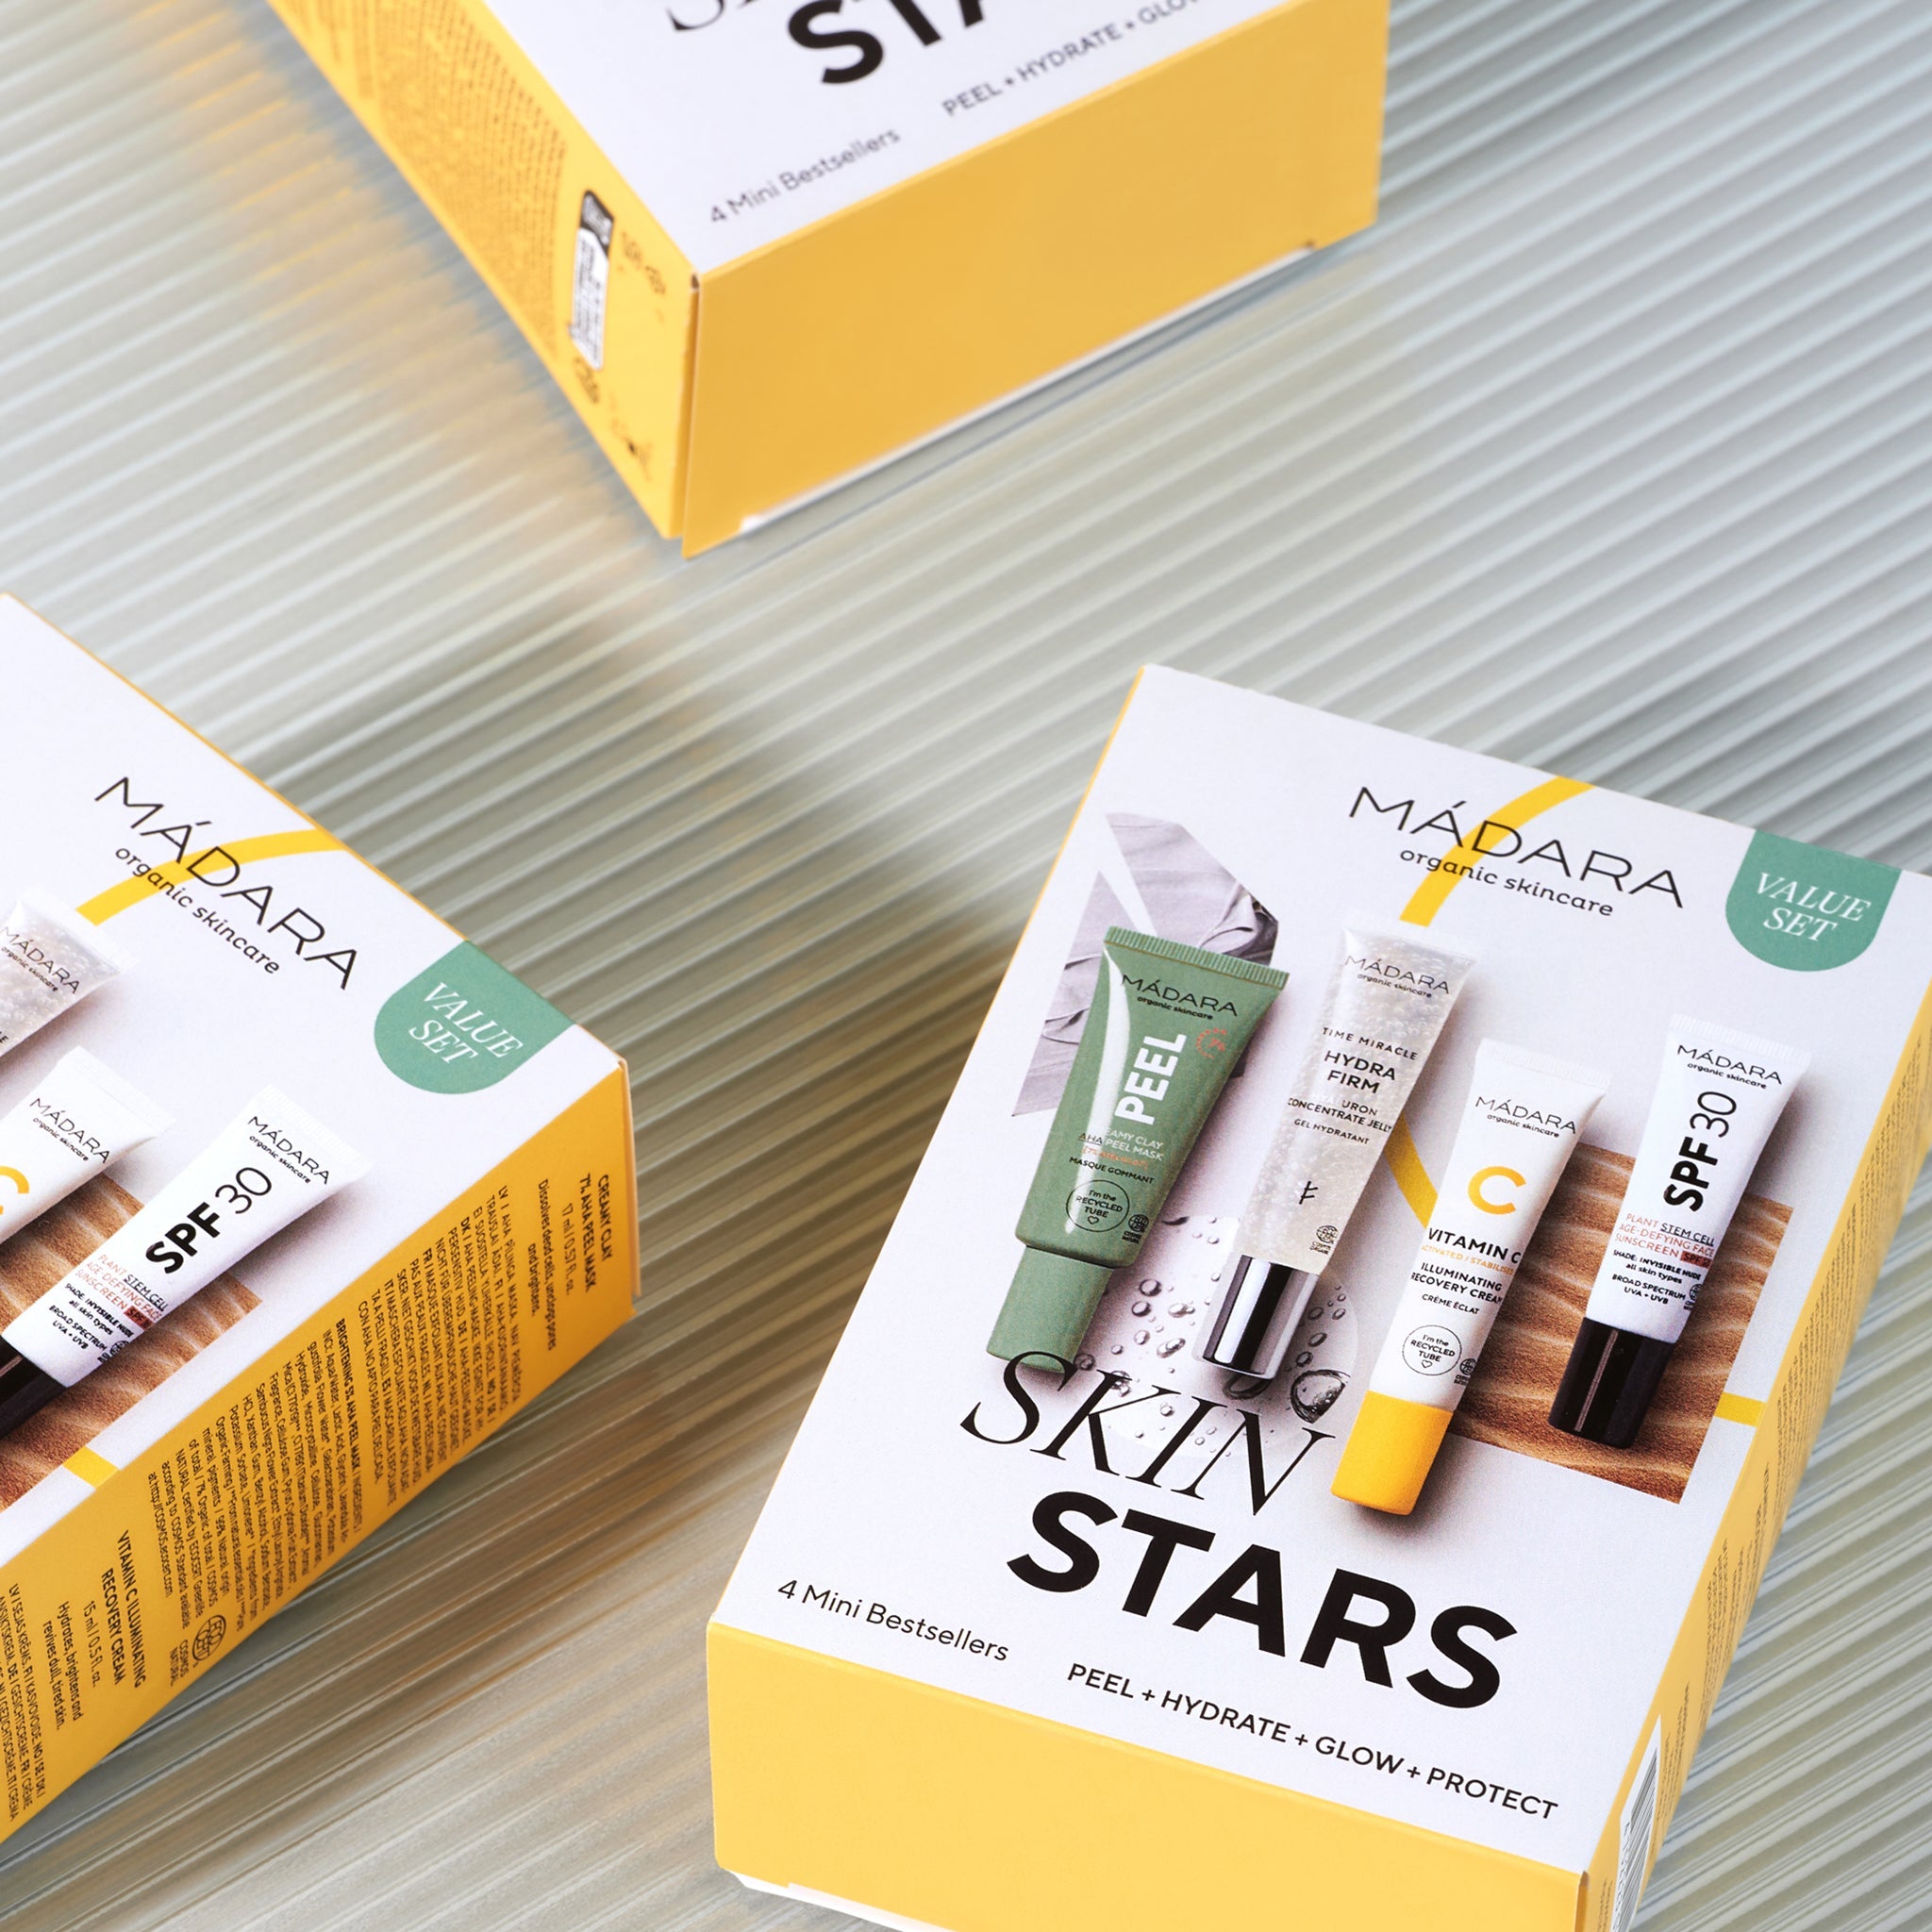 Skin Stars 4 Mini Bestsellers Set - mypure.co.uk